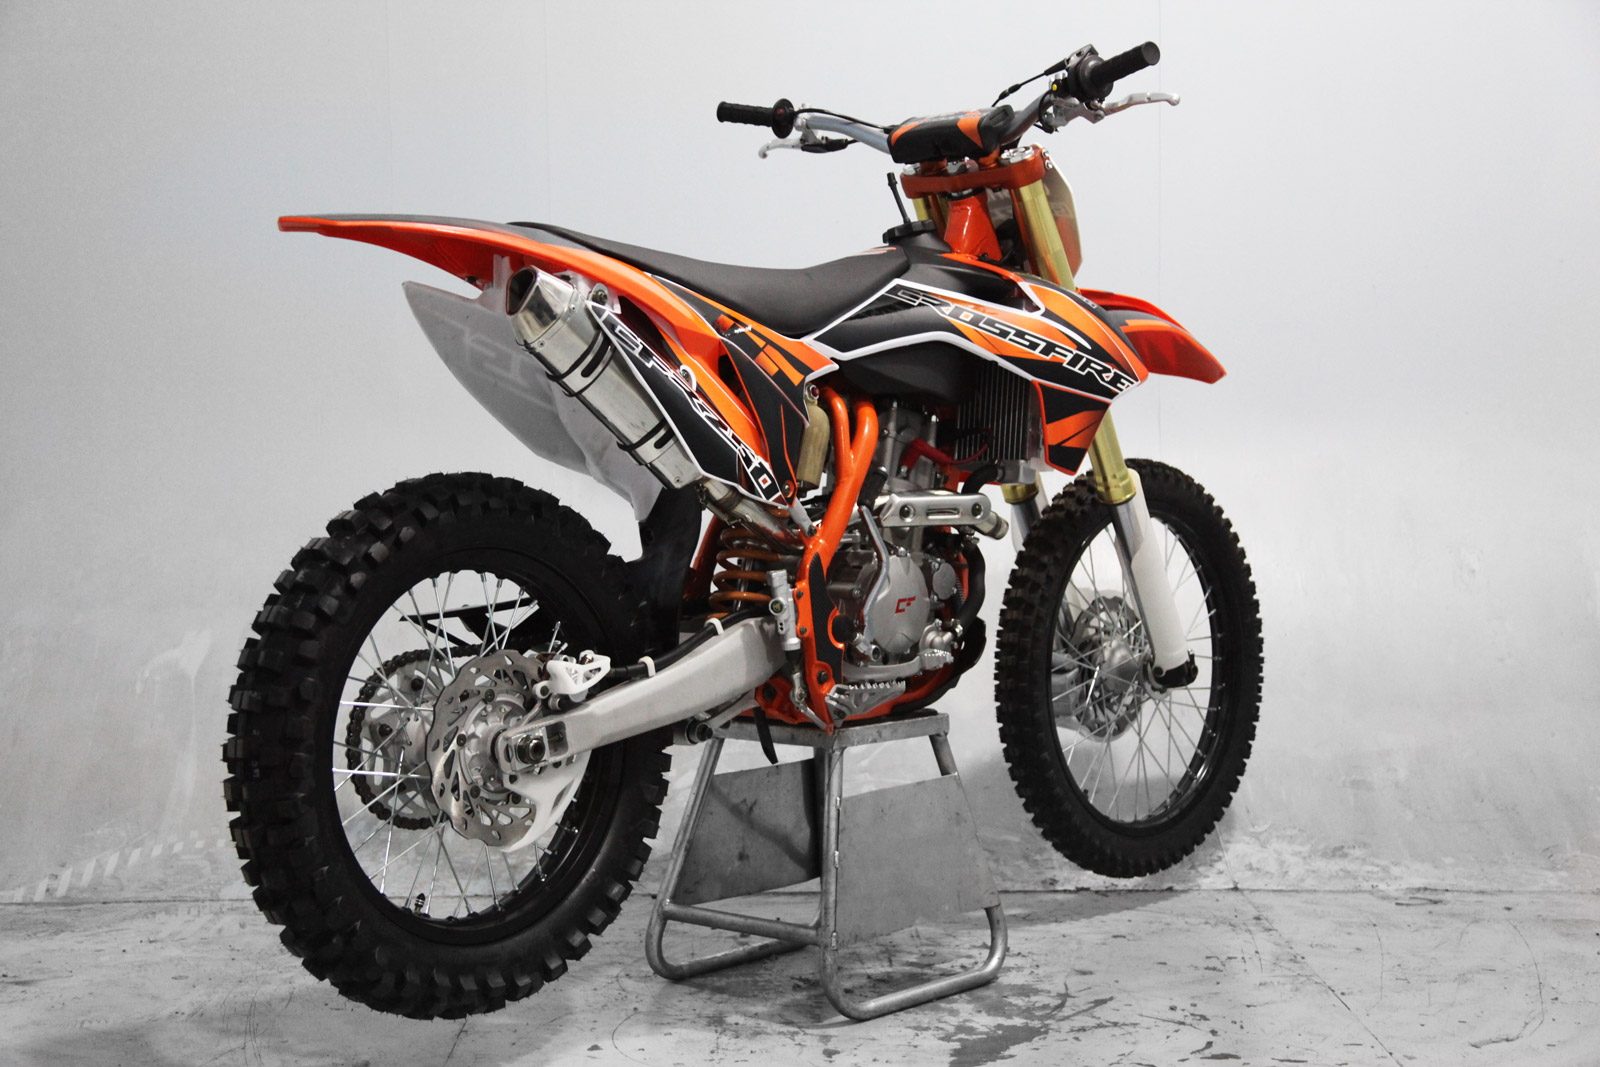 https://crossfiremotorcycles.com/wp/wp-content/uploads/2015/04/crossfire-motorbike-motorcycle-dirt-bike-cfr250-250cc-orange-dbc.jpg